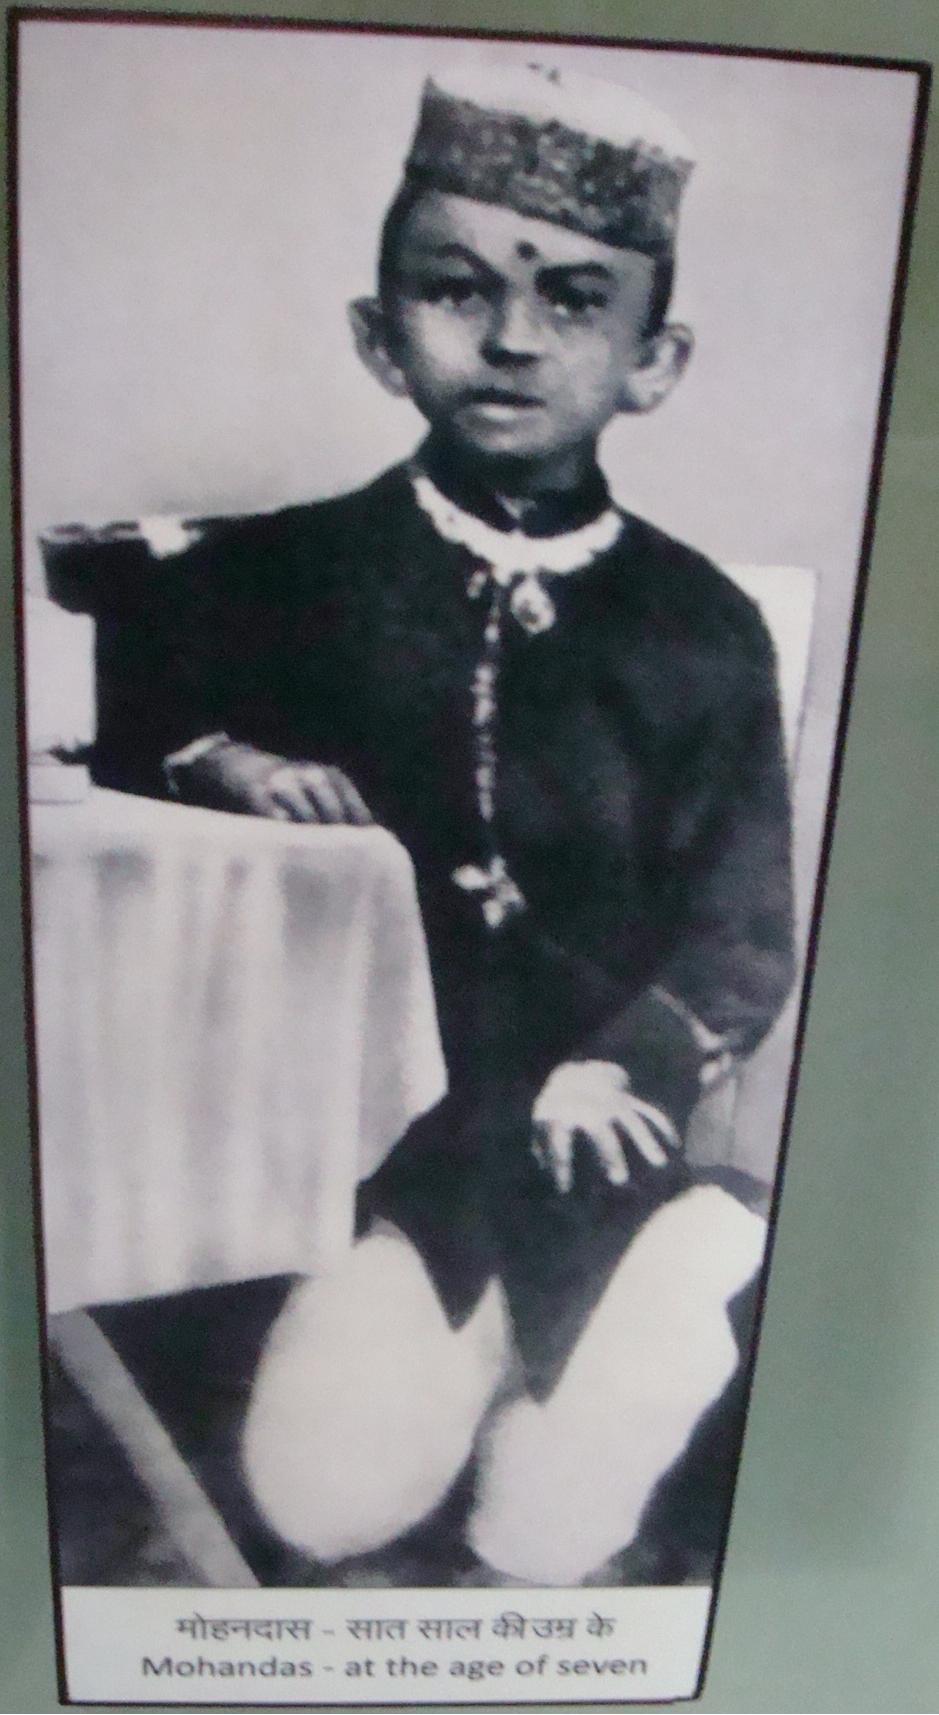 Gandhiji in his primary school years, photo displayed at the Ka Ba Delo in Rajkot, Gujarat